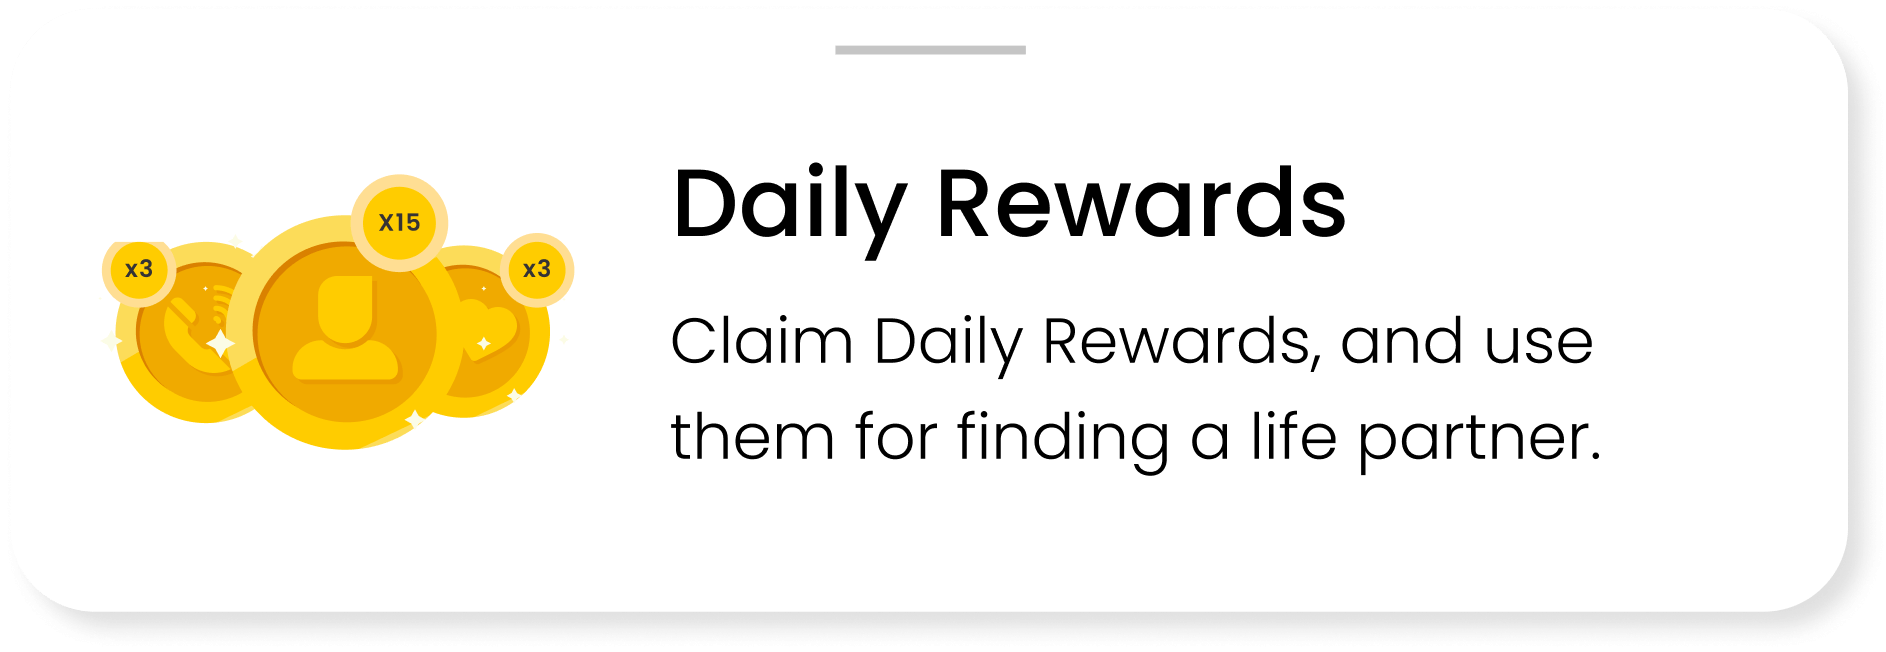 Daily Reward Feature